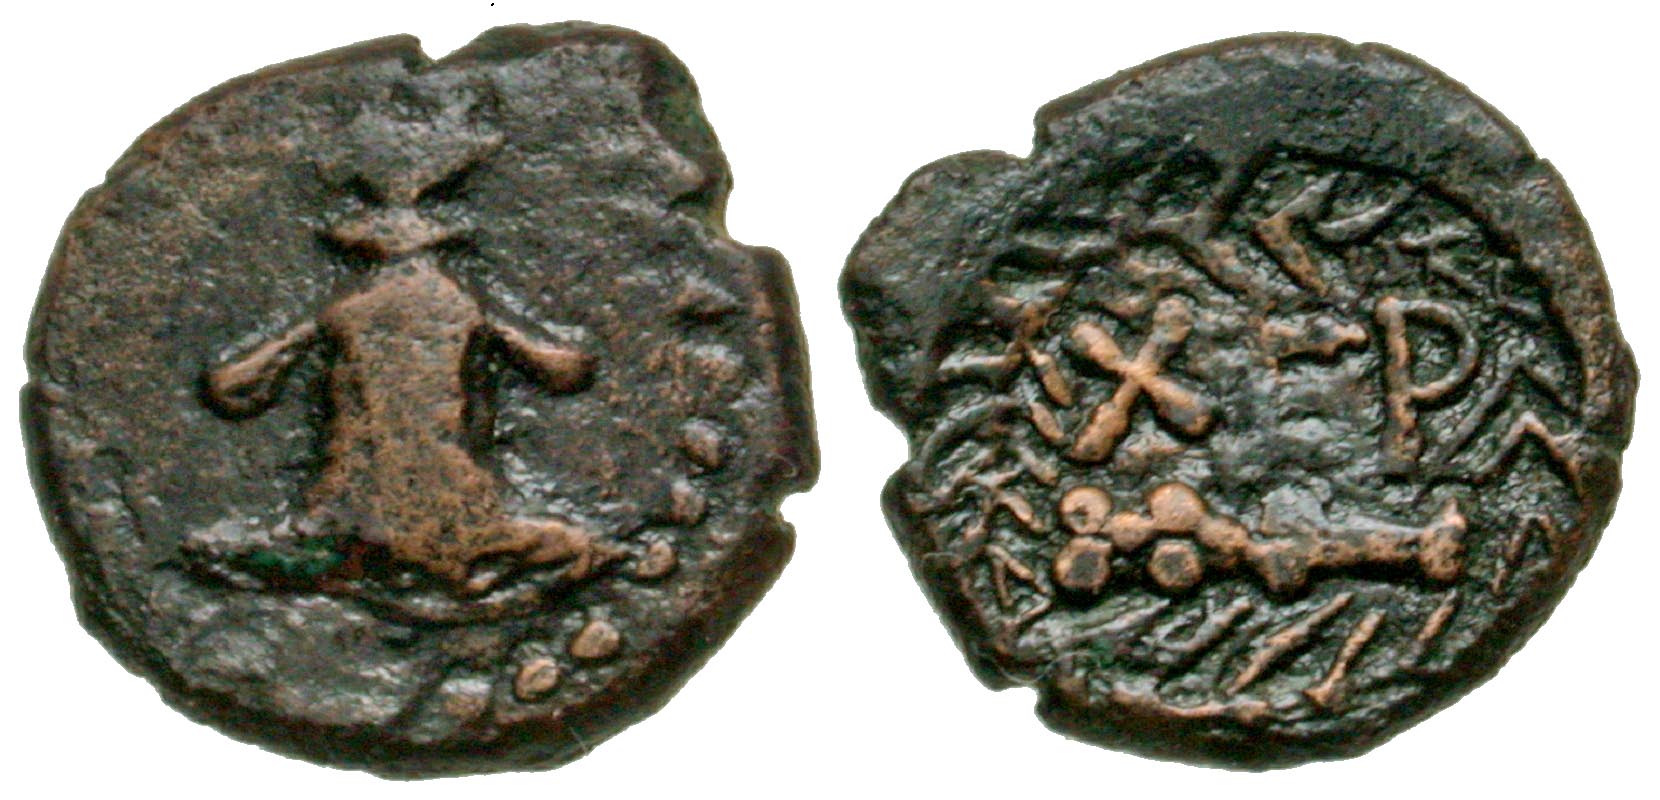 Tauric Chersonesos, Chersonesos. civic issue. 375-365 B.C. AE 12. 